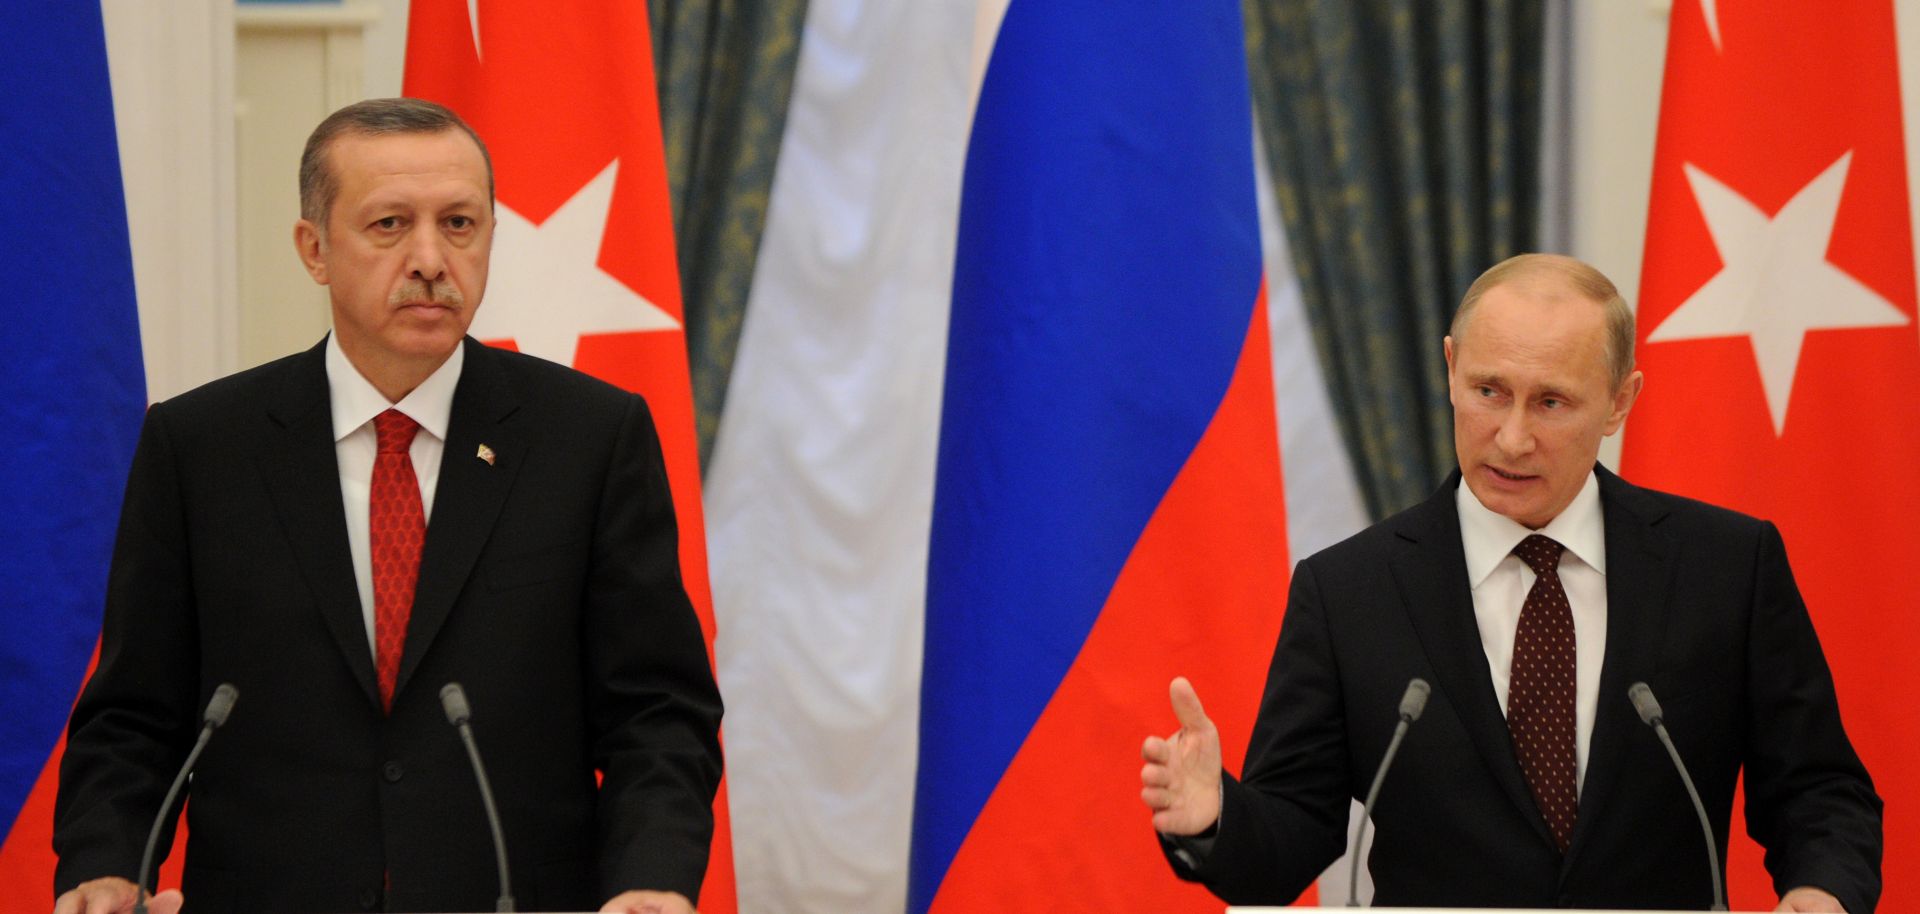 Russian President Vladimir Putin and Turkish Prime Minister Recep Tayyip Erdogan speak during a press conference